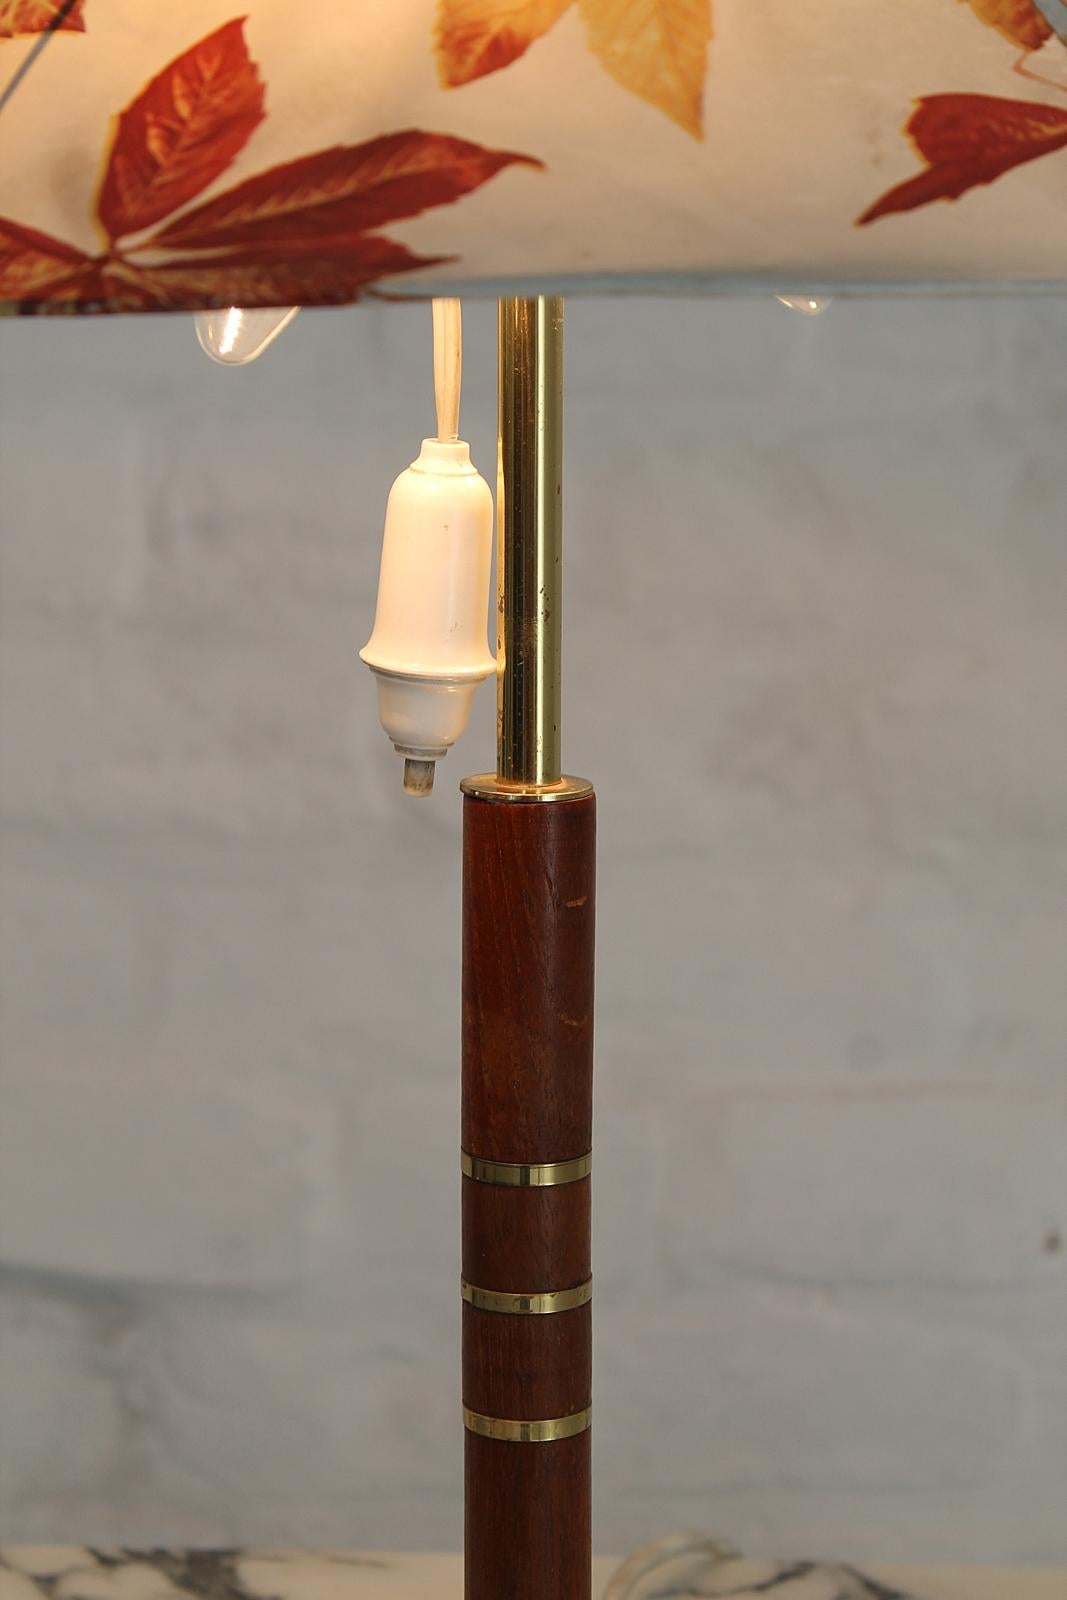 Rare Midcentury Tripod Table Lamp Attributed to J. T. Kalmar, Austria, 1950 For Sale 1